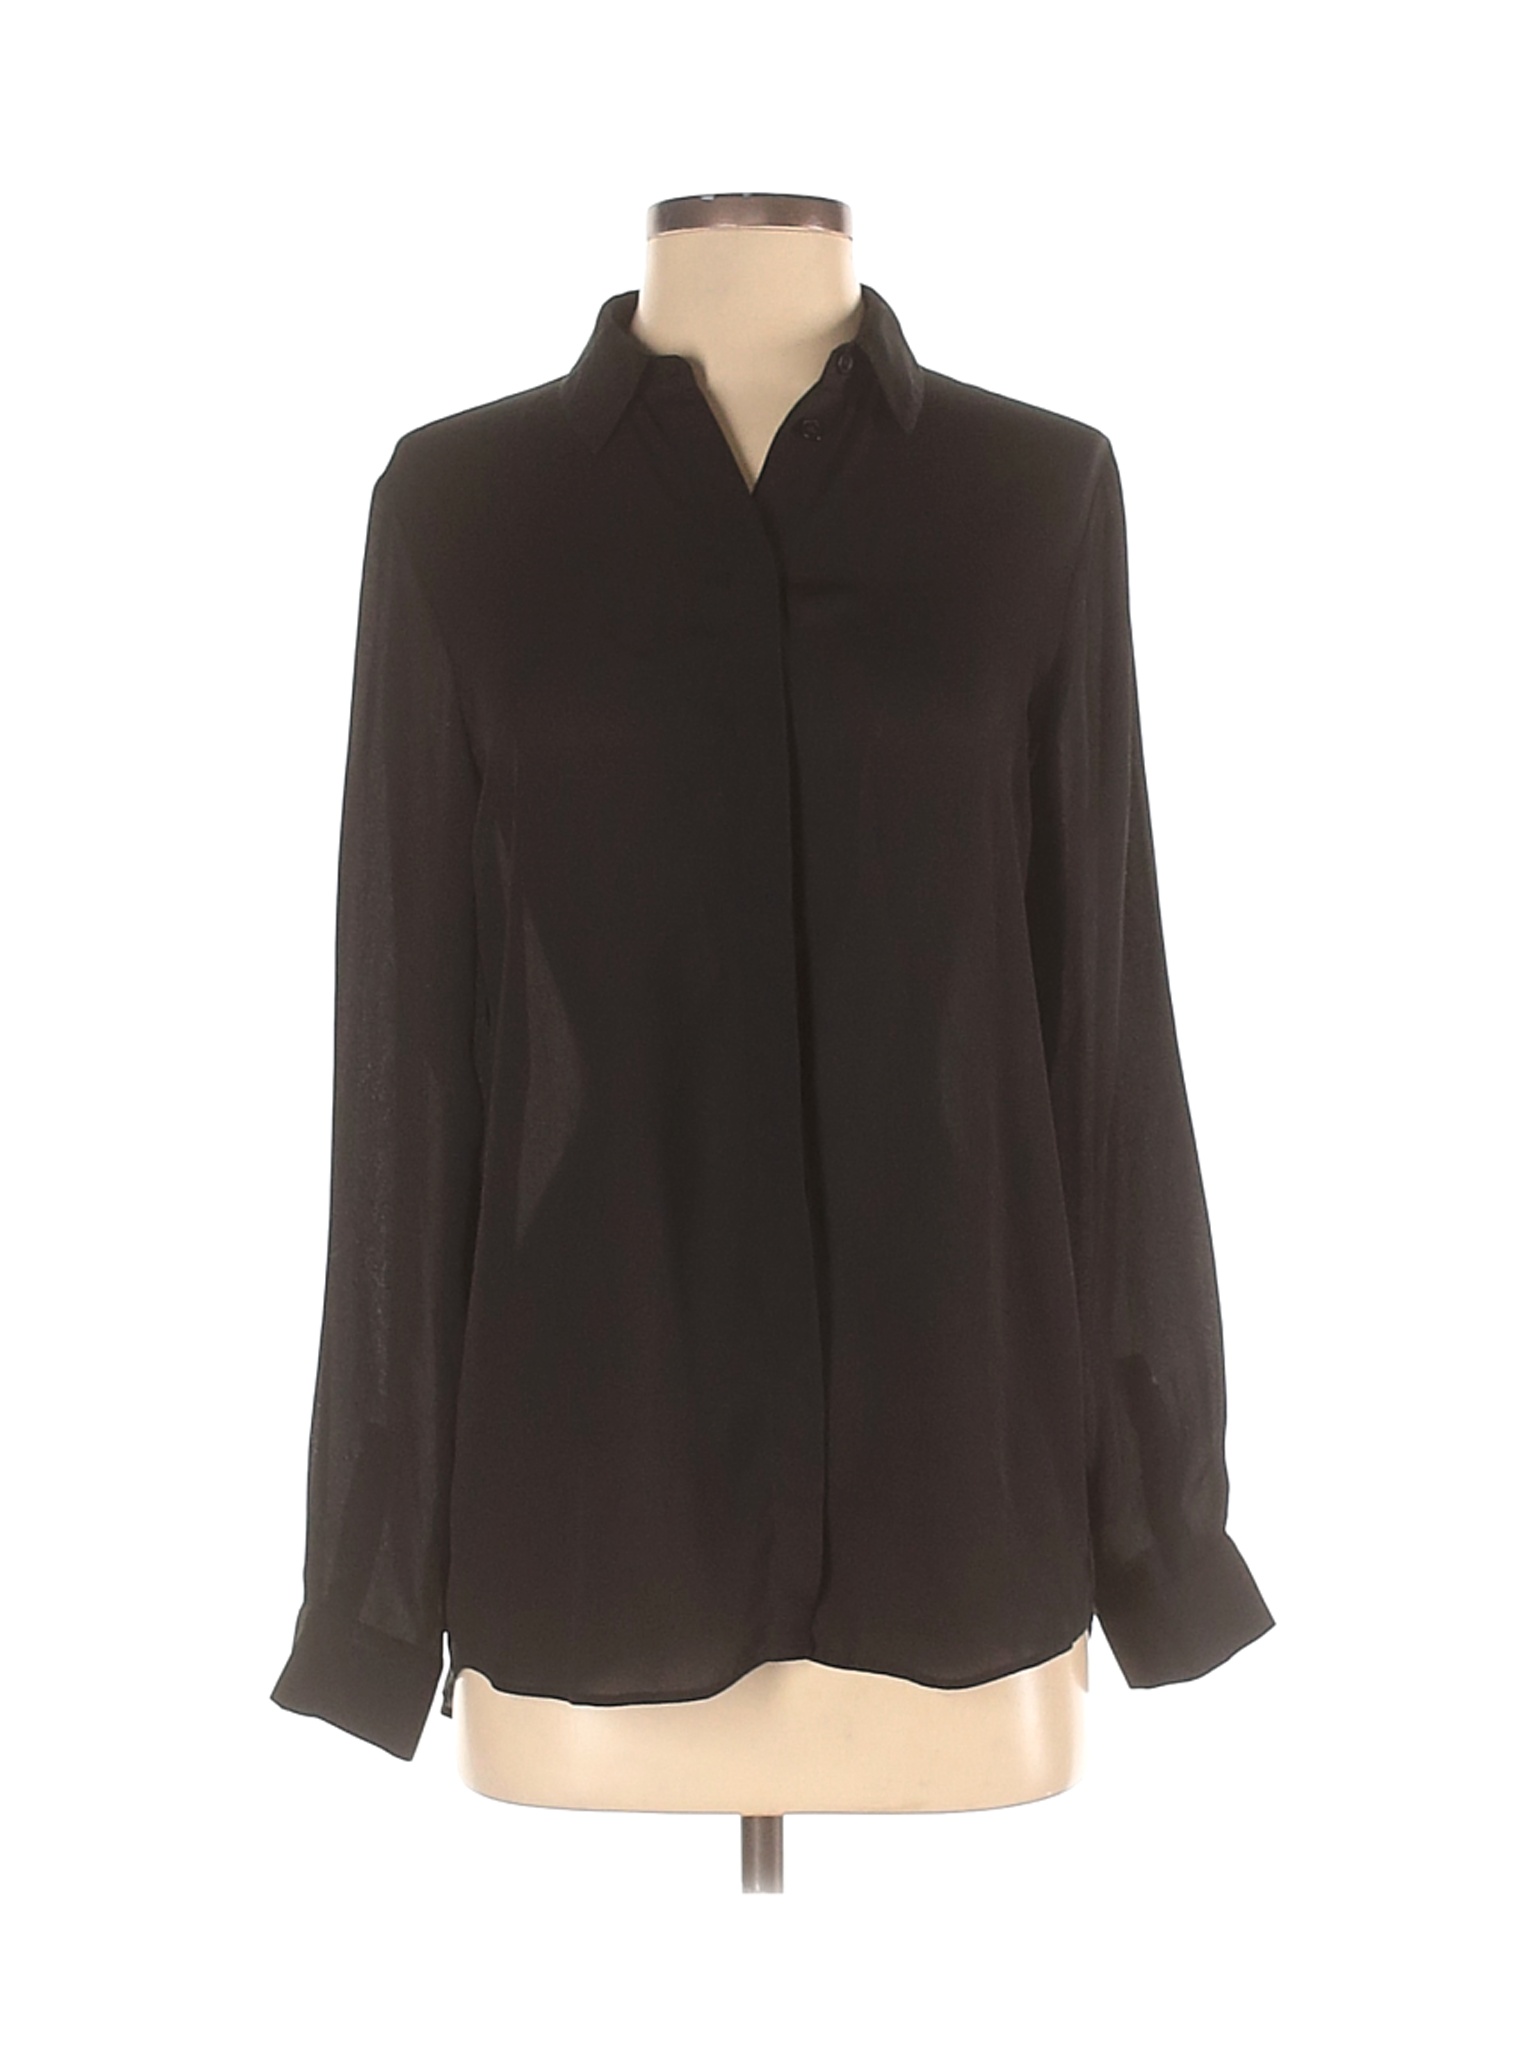 ASOS Women Brown Long Sleeve Button-Down Shirt 4 | eBay